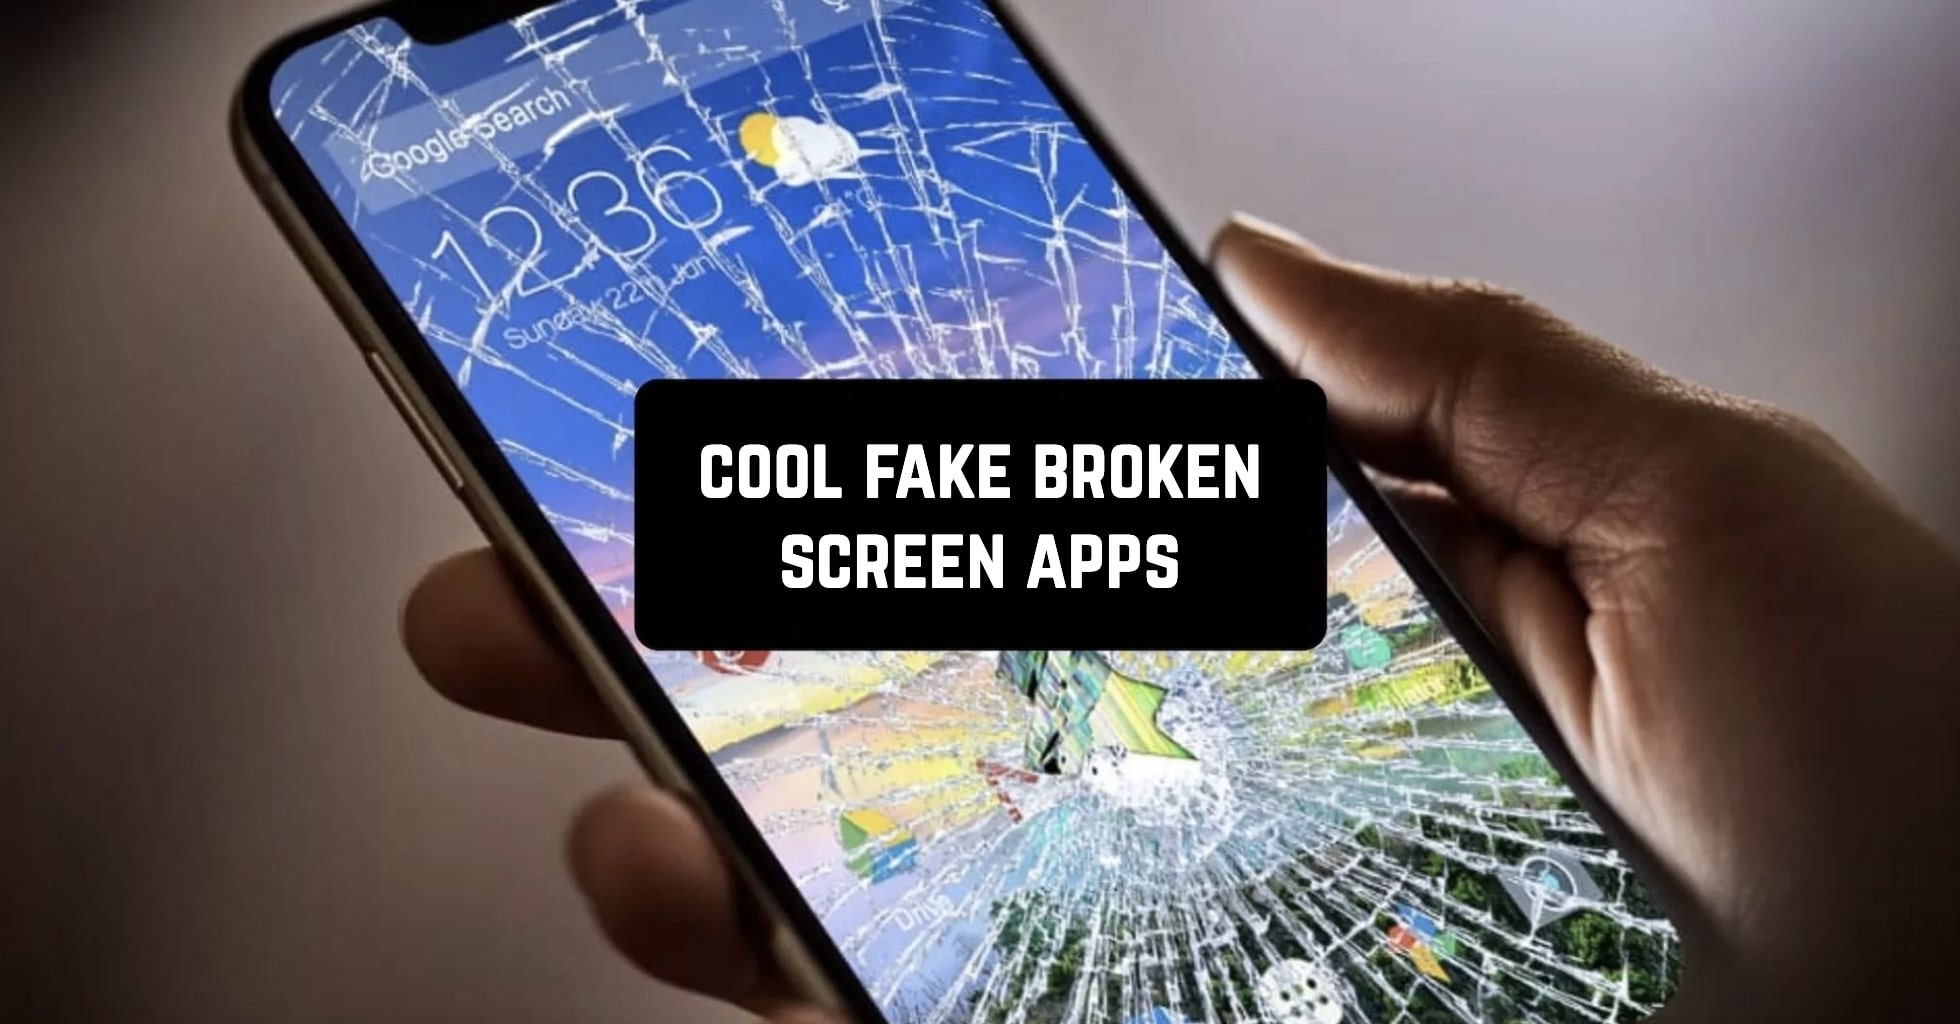 1000 Broken Phone Pictures  Download Free Images on Unsplash